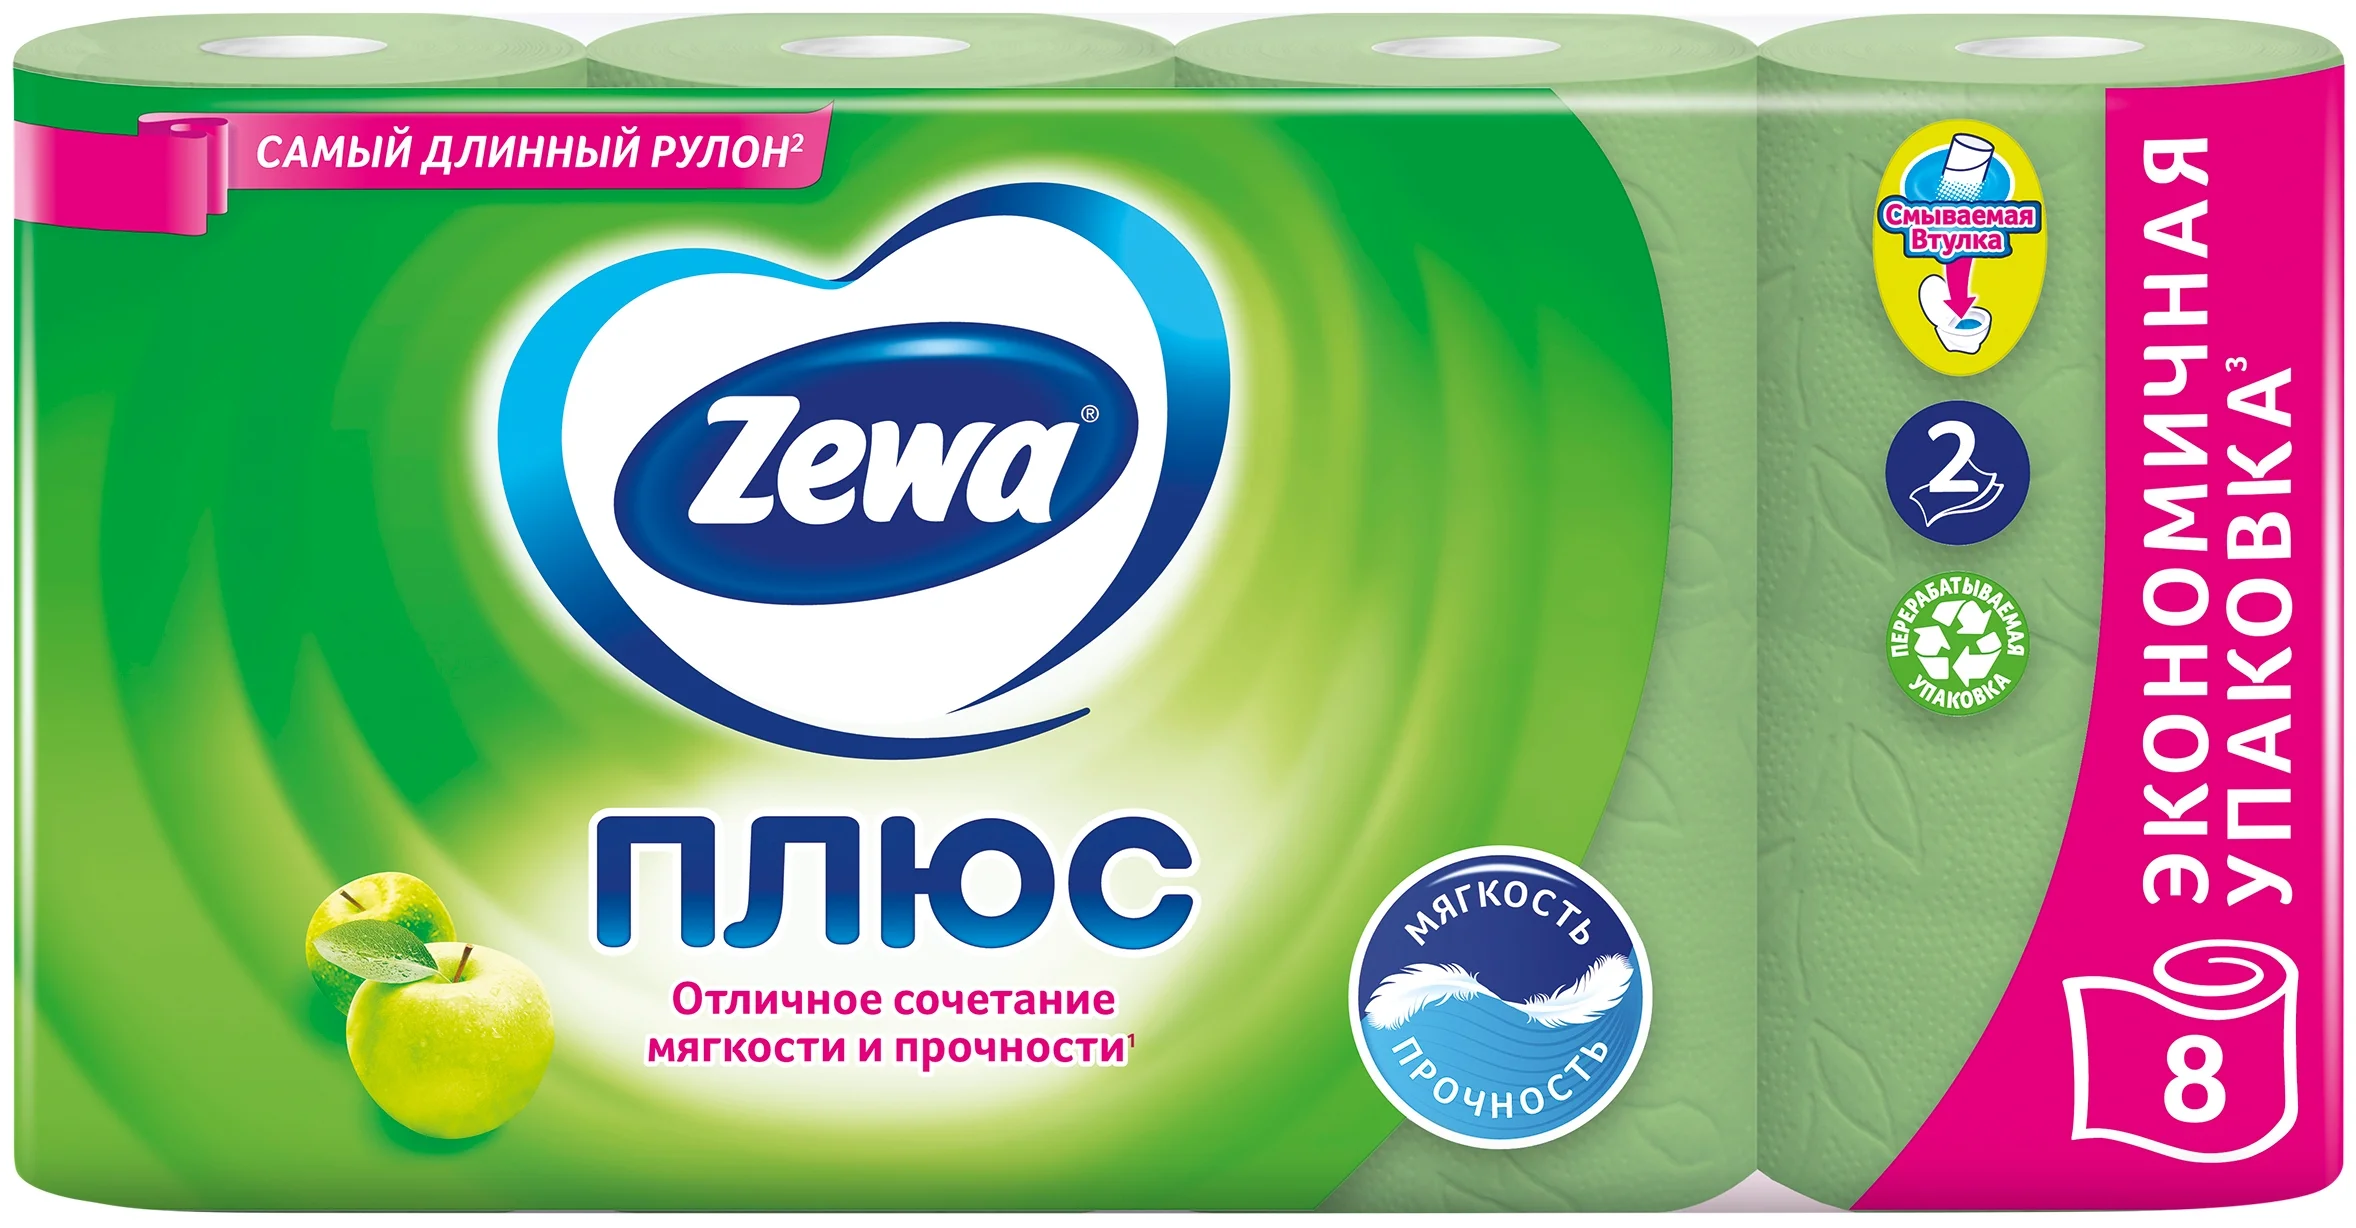 Zewa Плюс Яблоко зеленая - материал: вторичная целлюлоза